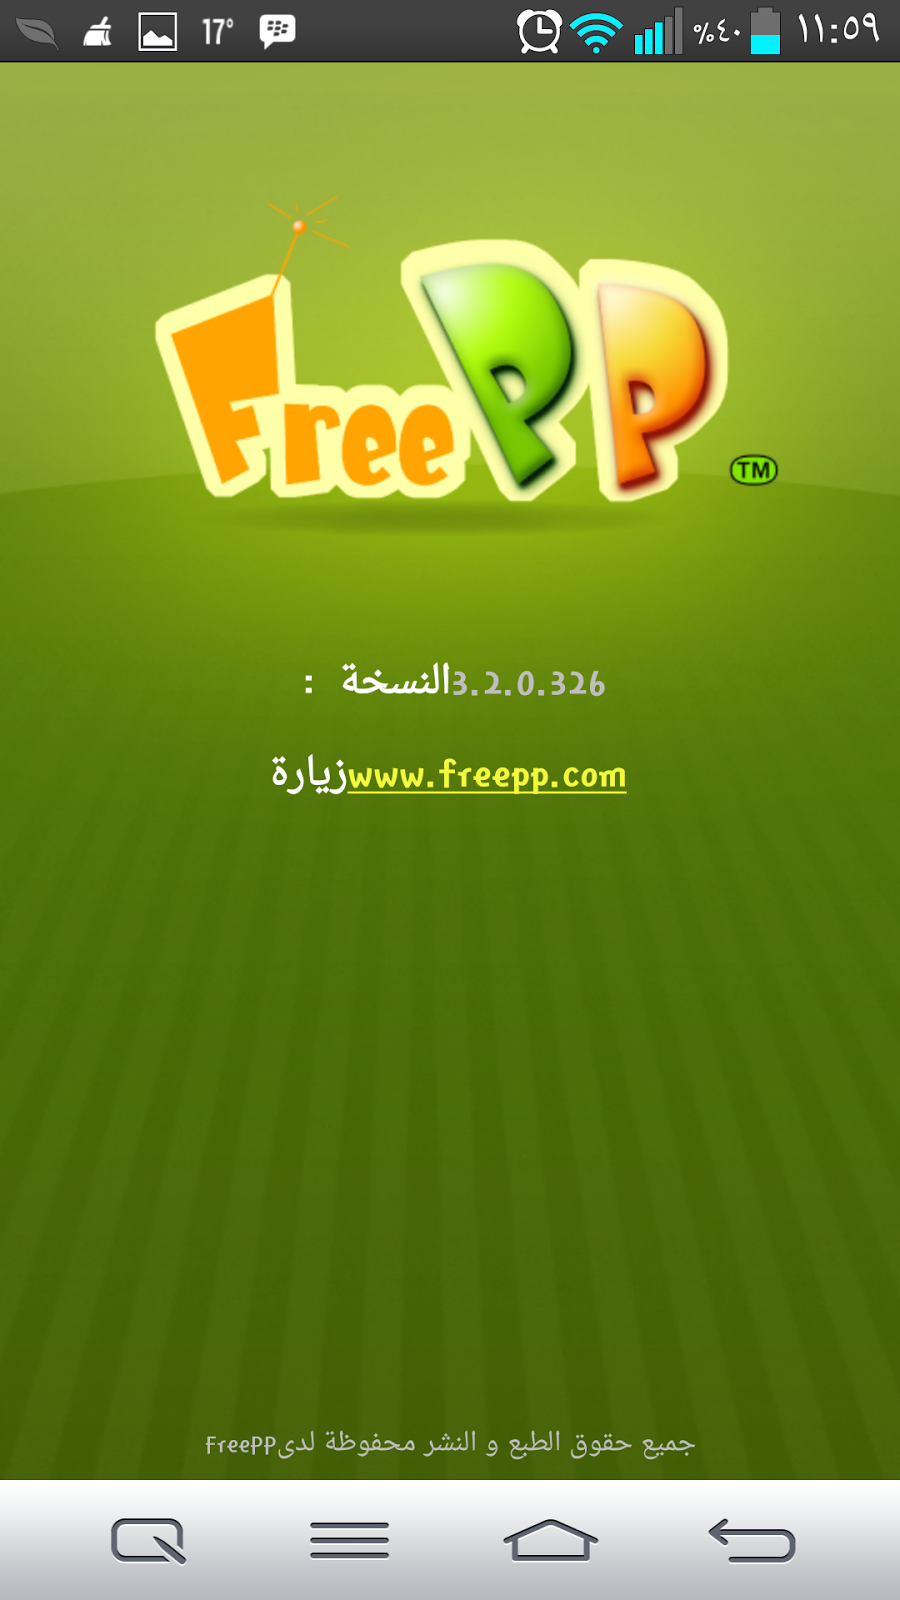 FreePP   2014 Screenshot_2014-03-14-11-59-44.png